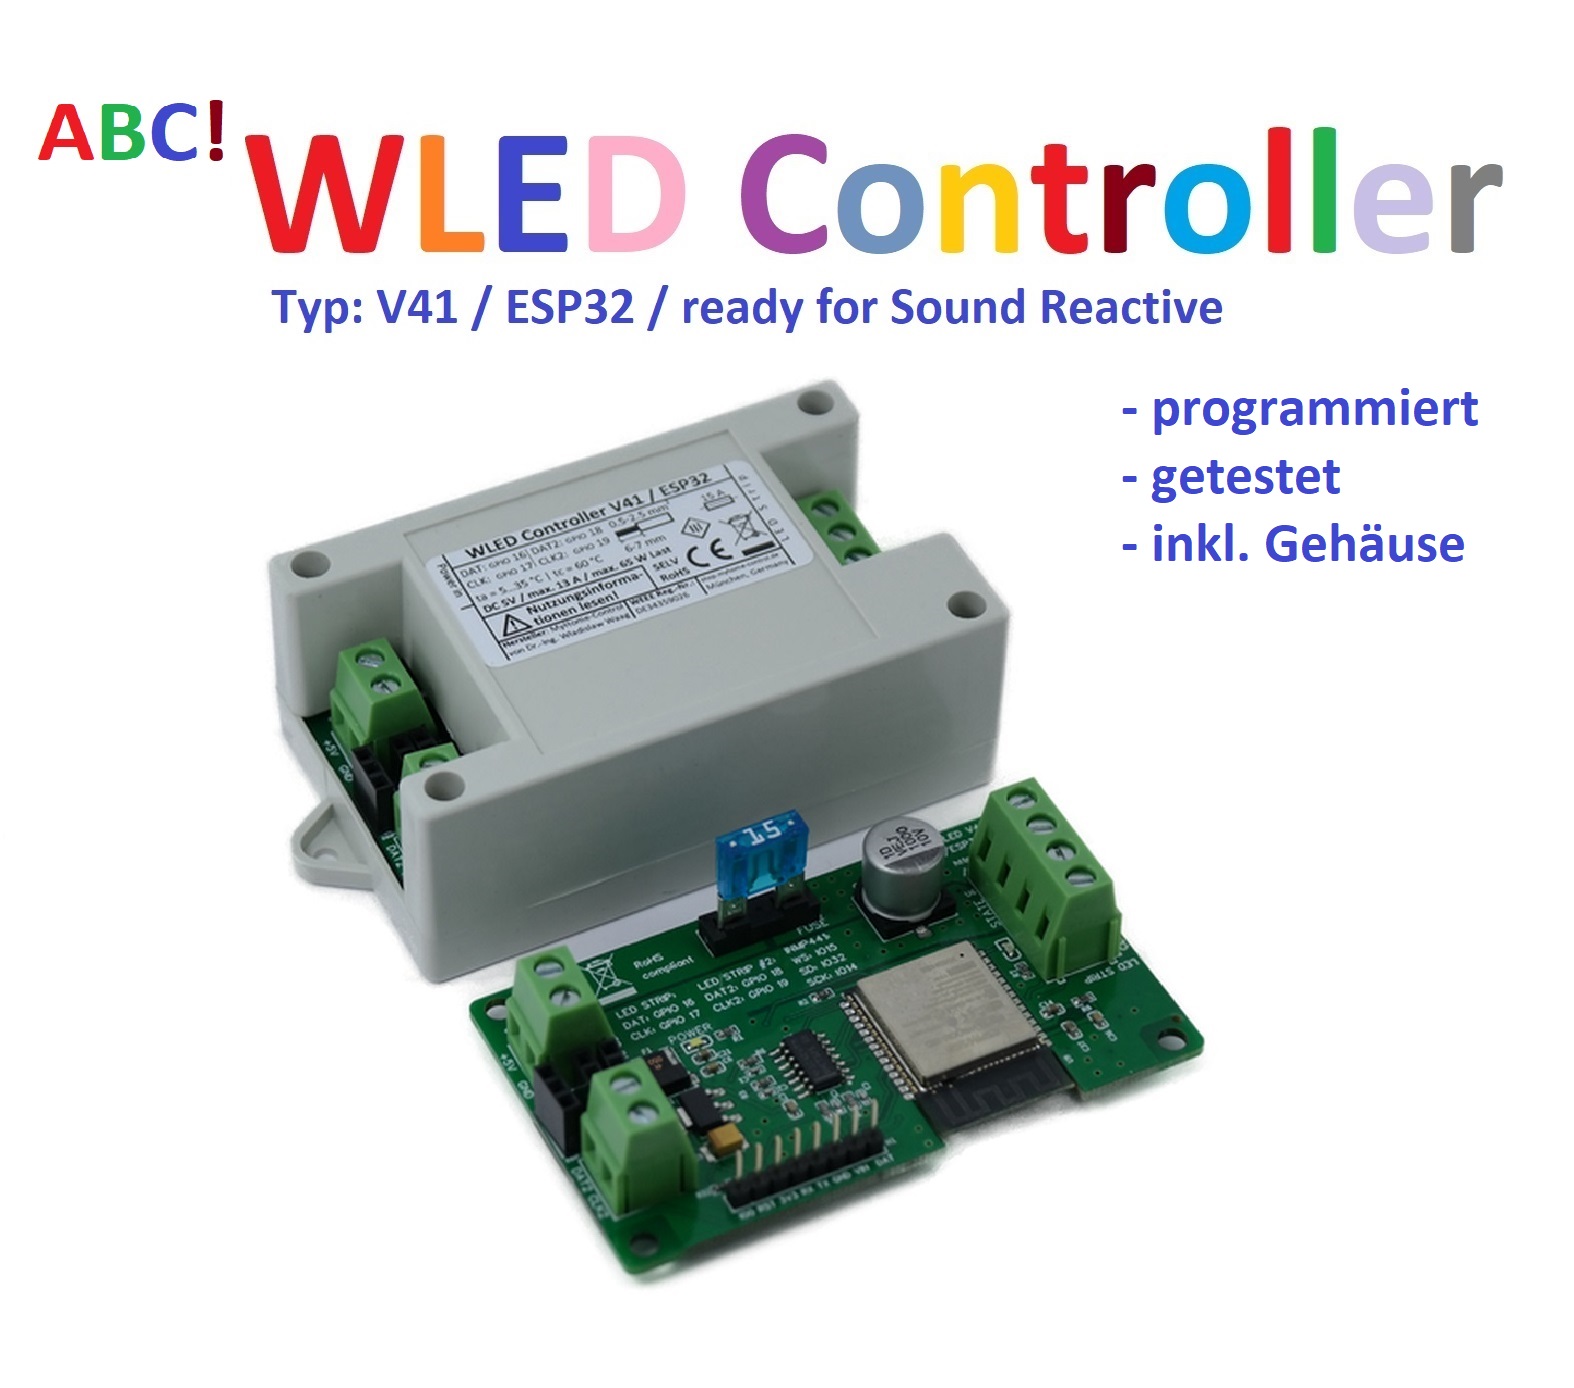 ABC! WLED Controller V41/ESP32